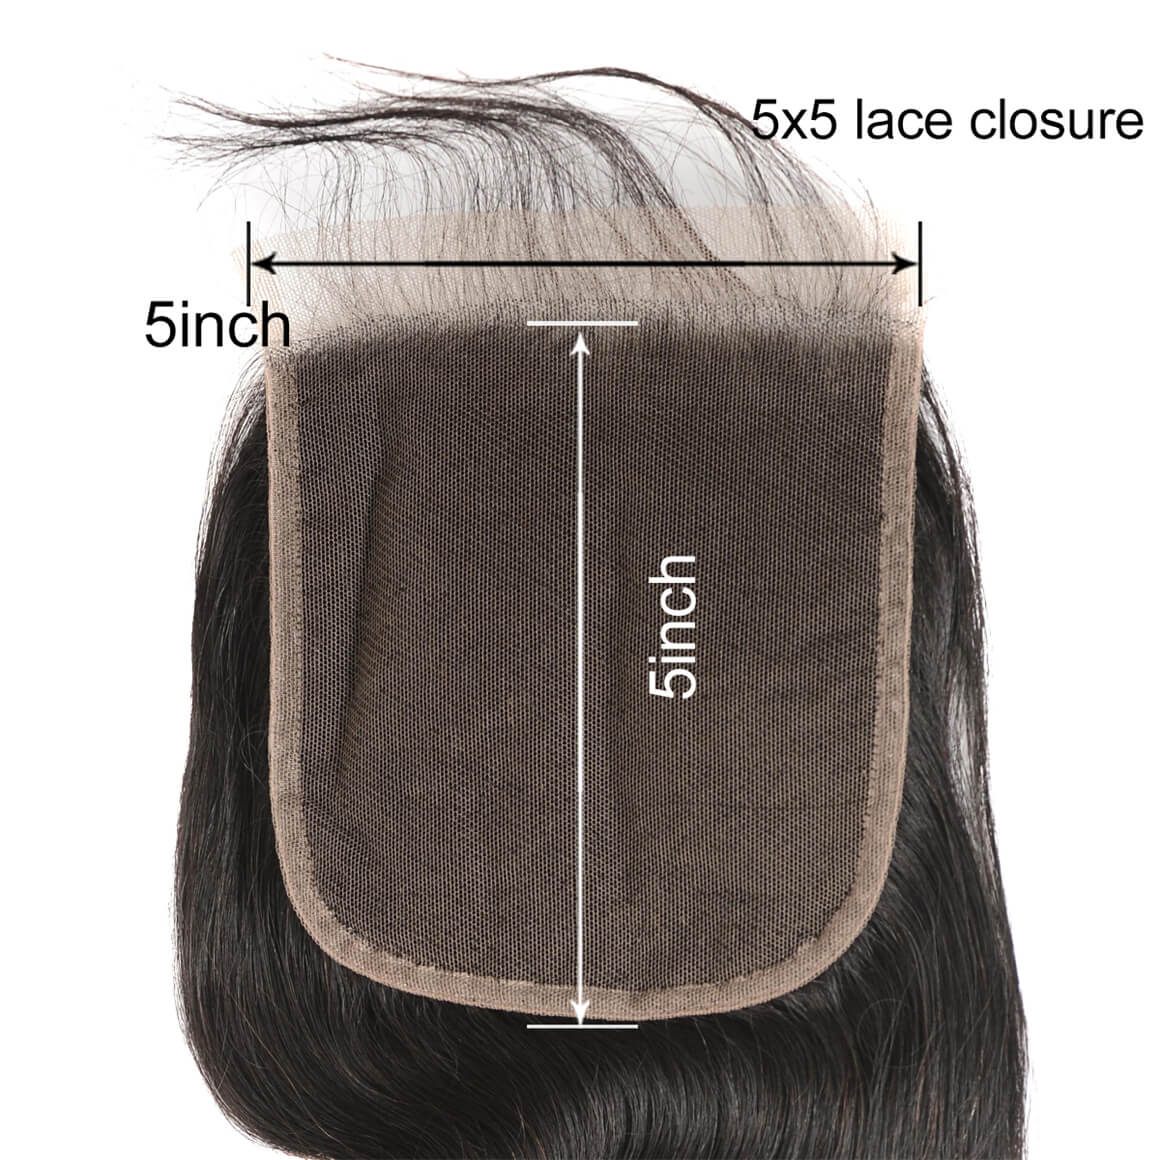 Human hair and 5x5 Lace Closure